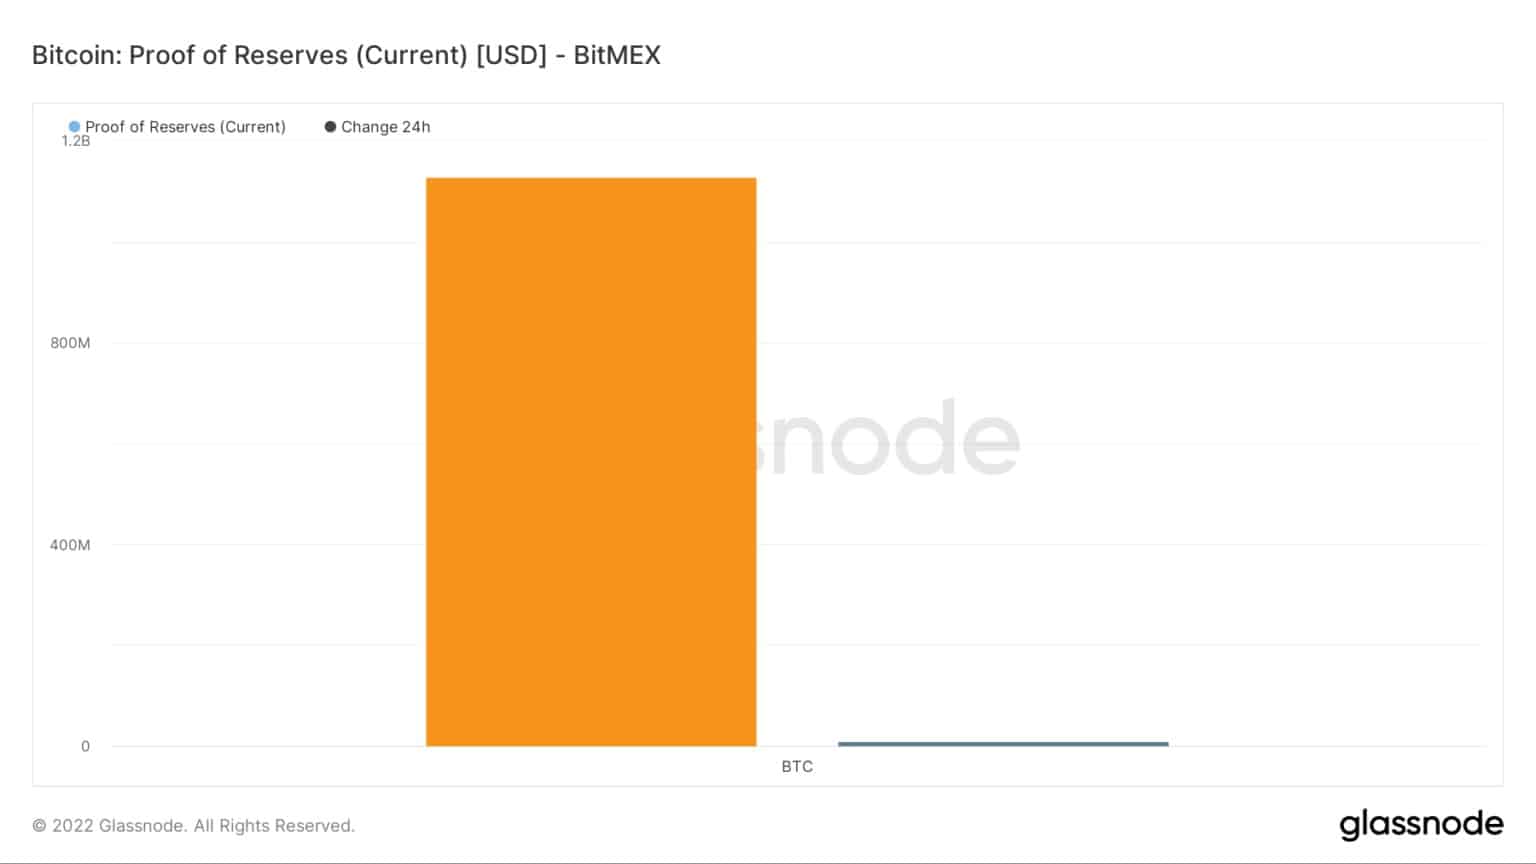 Proof of reserves - BitMEX / Quelle: Glassnode